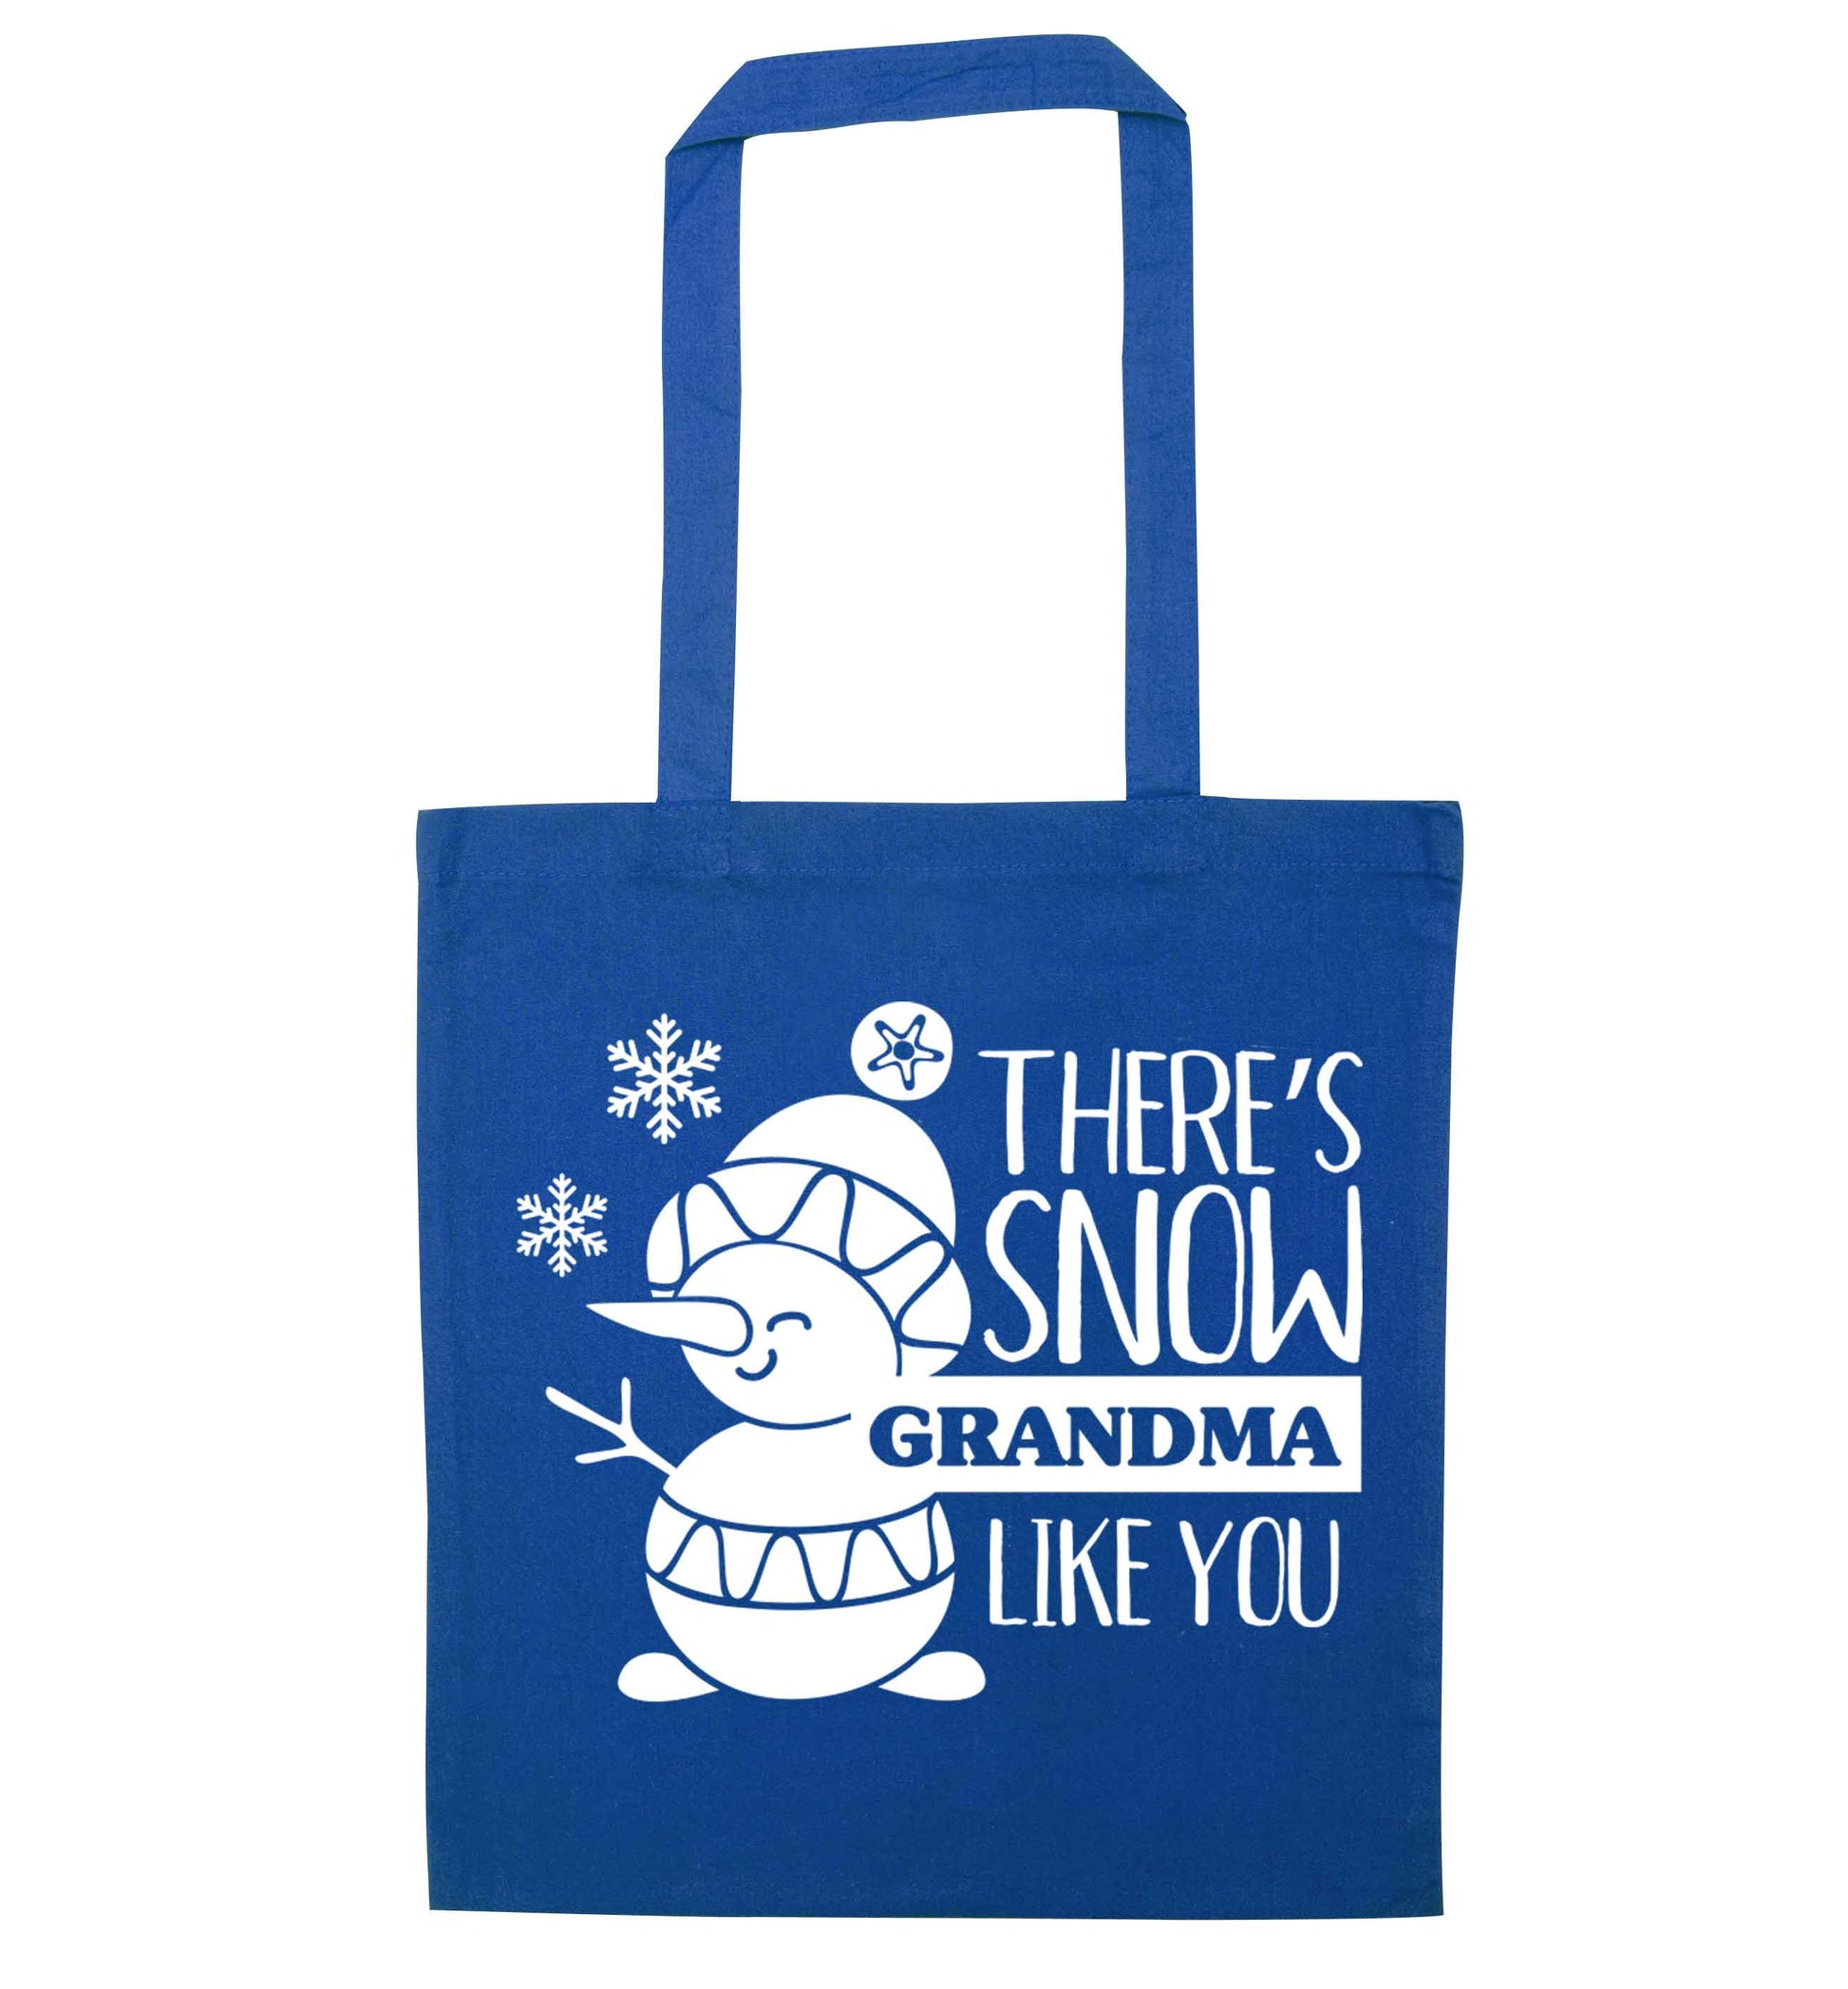 There's snow grandma like you blue tote bag